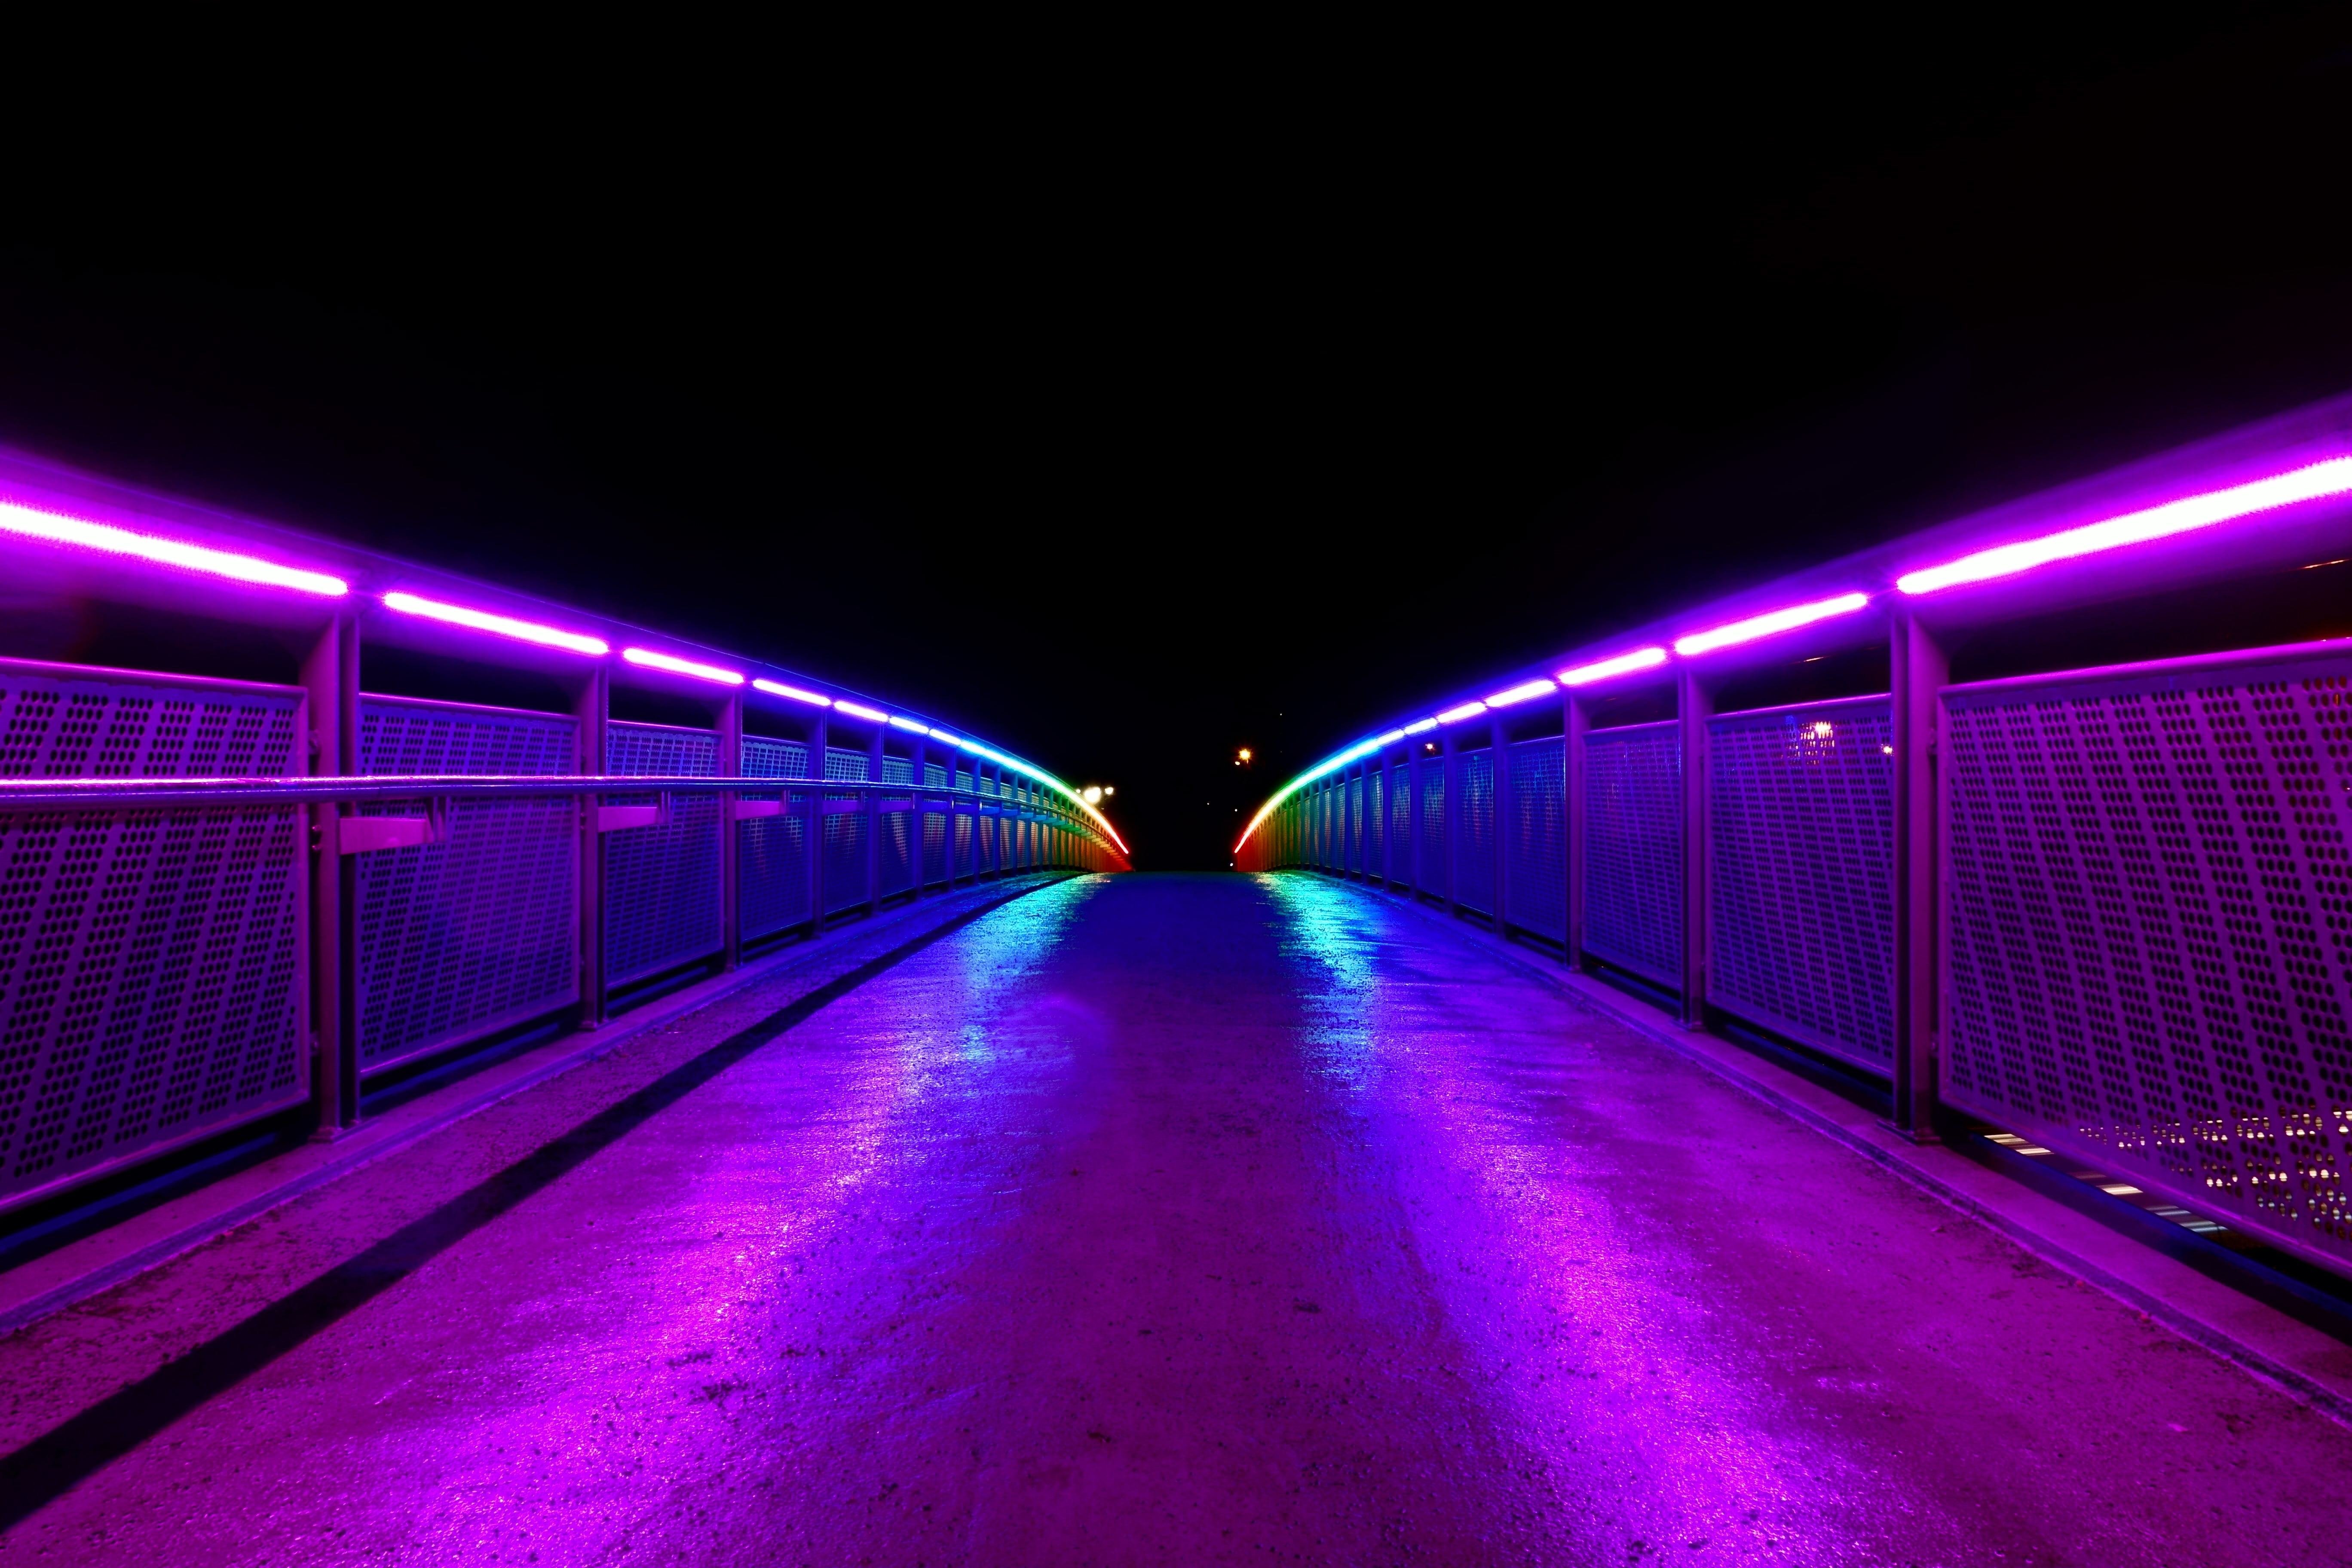 led wallpaper,purple,blue,violet,light,lighting